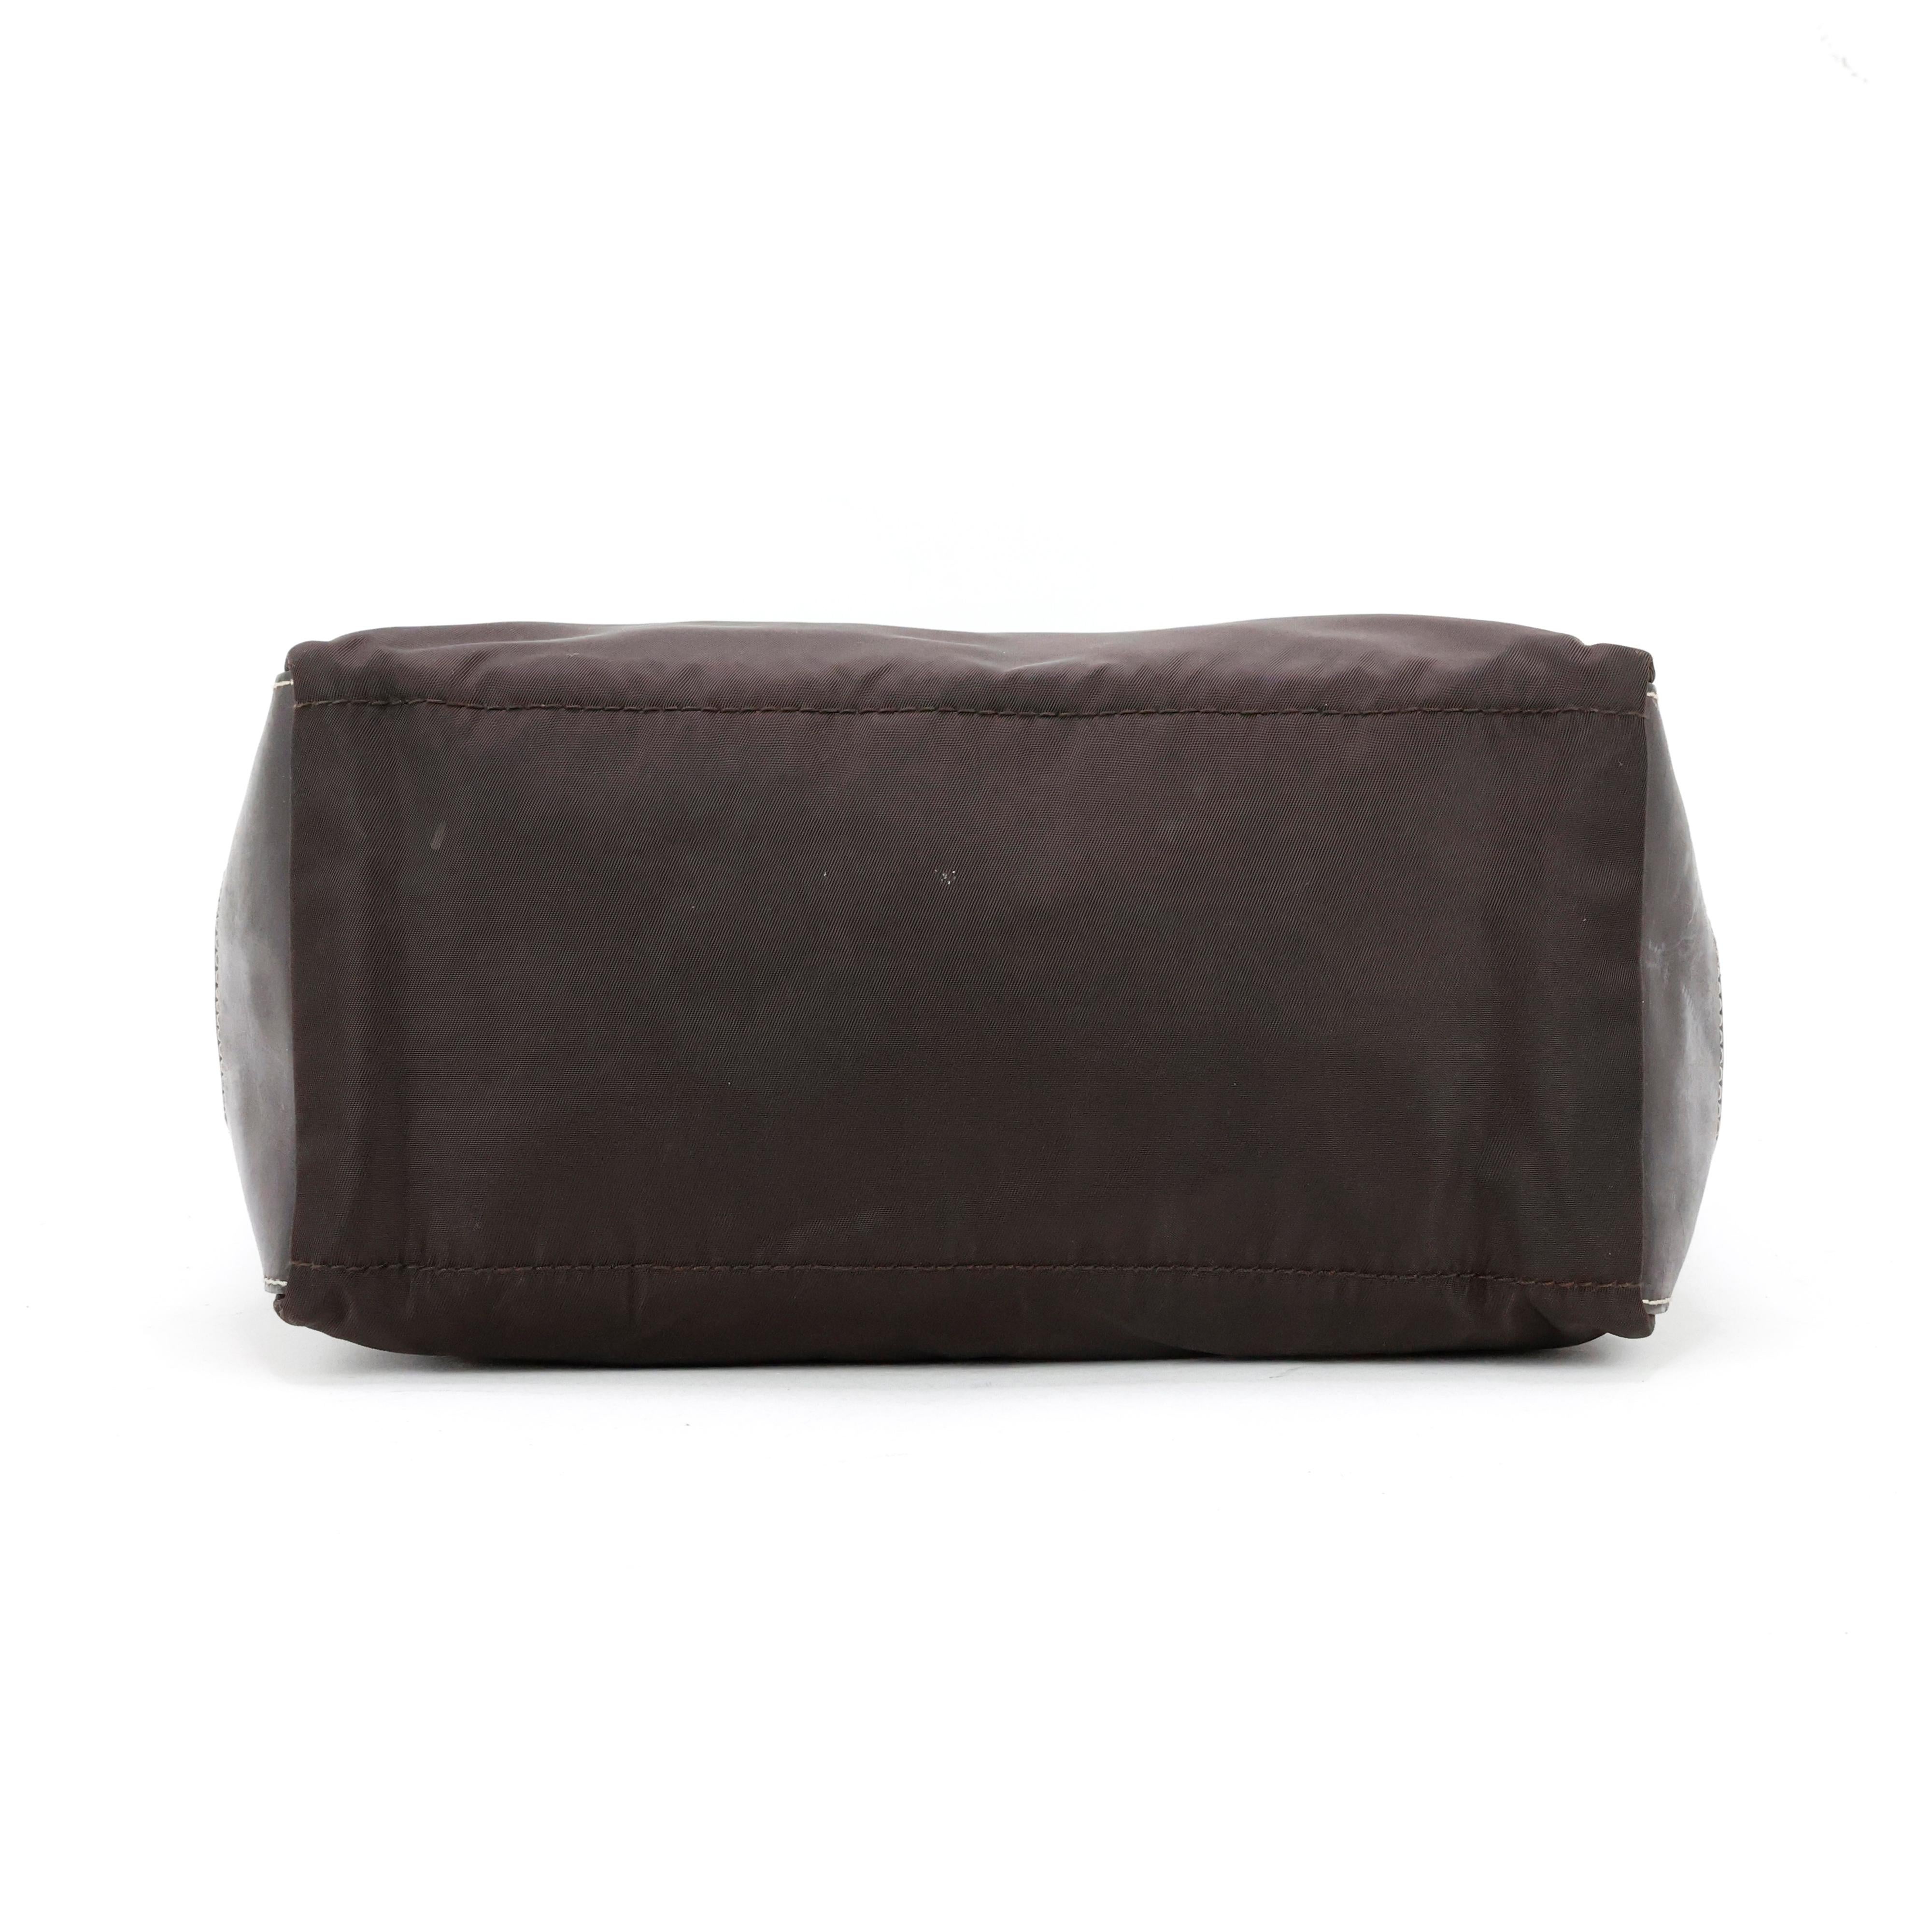 Prada bag in Nylon + Leather In Good Condition For Sale In Bressanone, IT